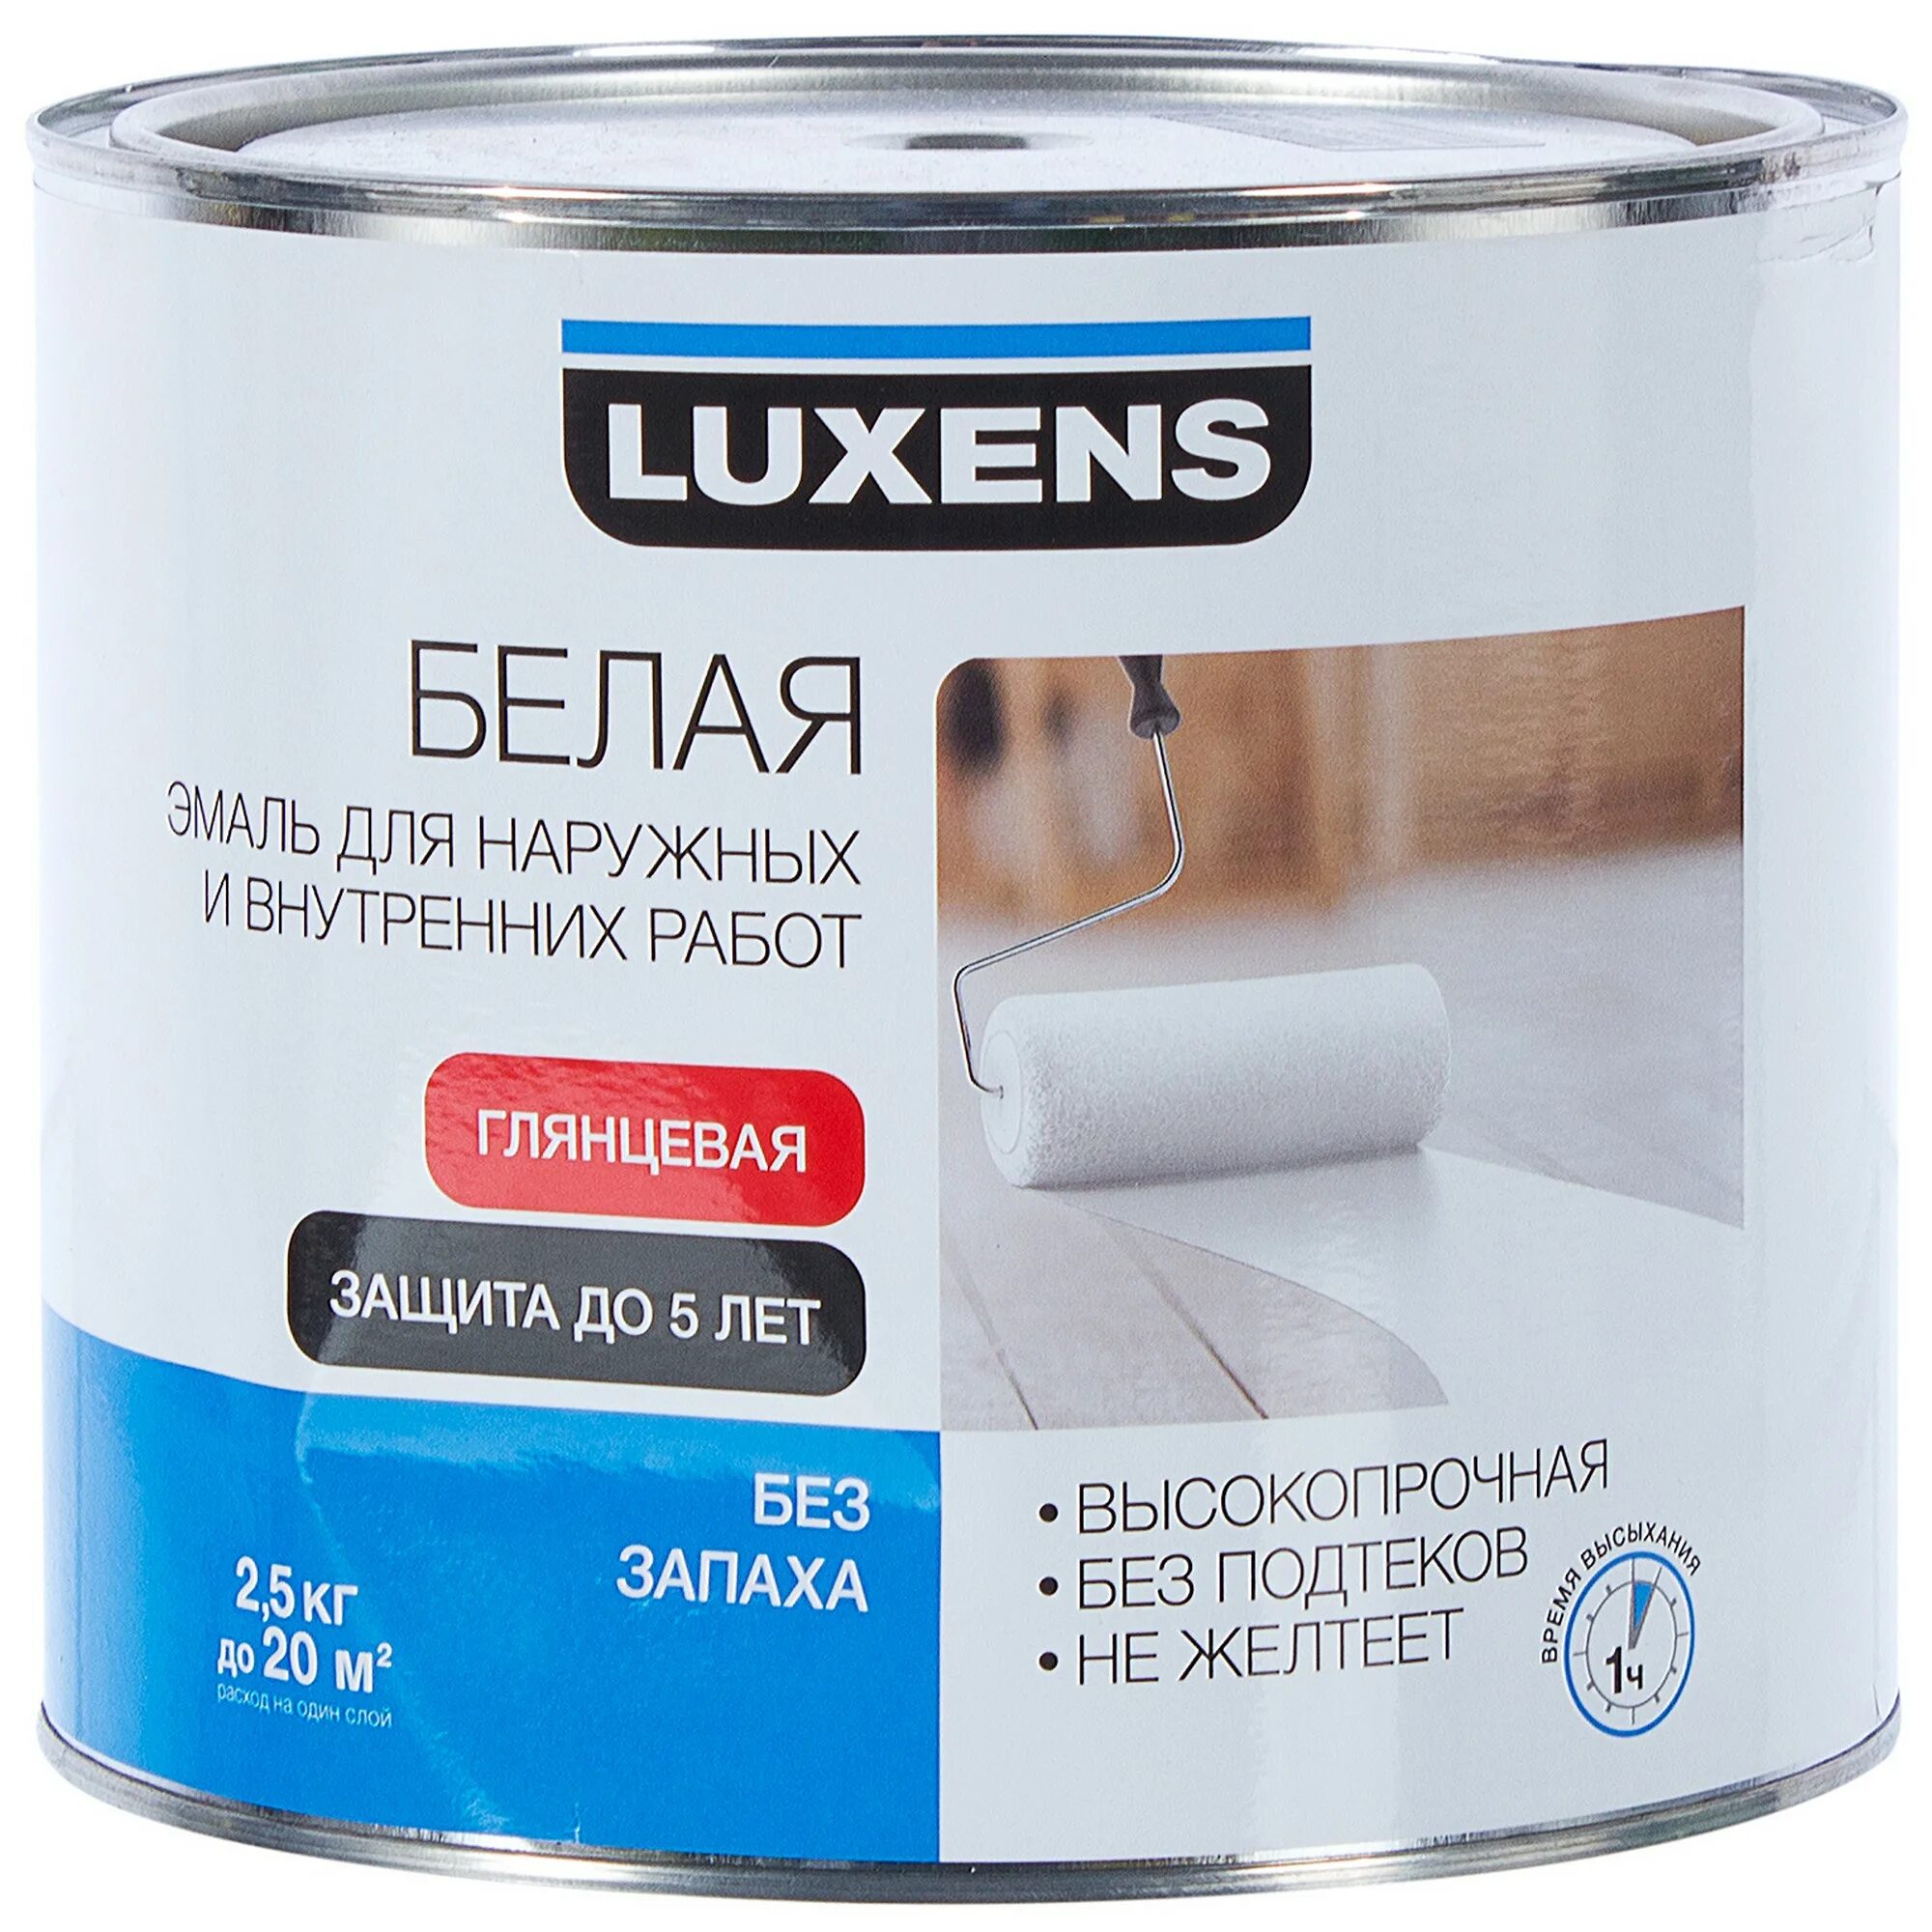 Цена глянцевой краски. Эмаль Luxens глянцевая цвет белый 2.5 кг. Эмаль универсальная Luxens 2.5 кг нежно-голубой. Эмаль акриловая Luxens глянцевая белая универсальная 2.5 кг. Luxens эмаль.